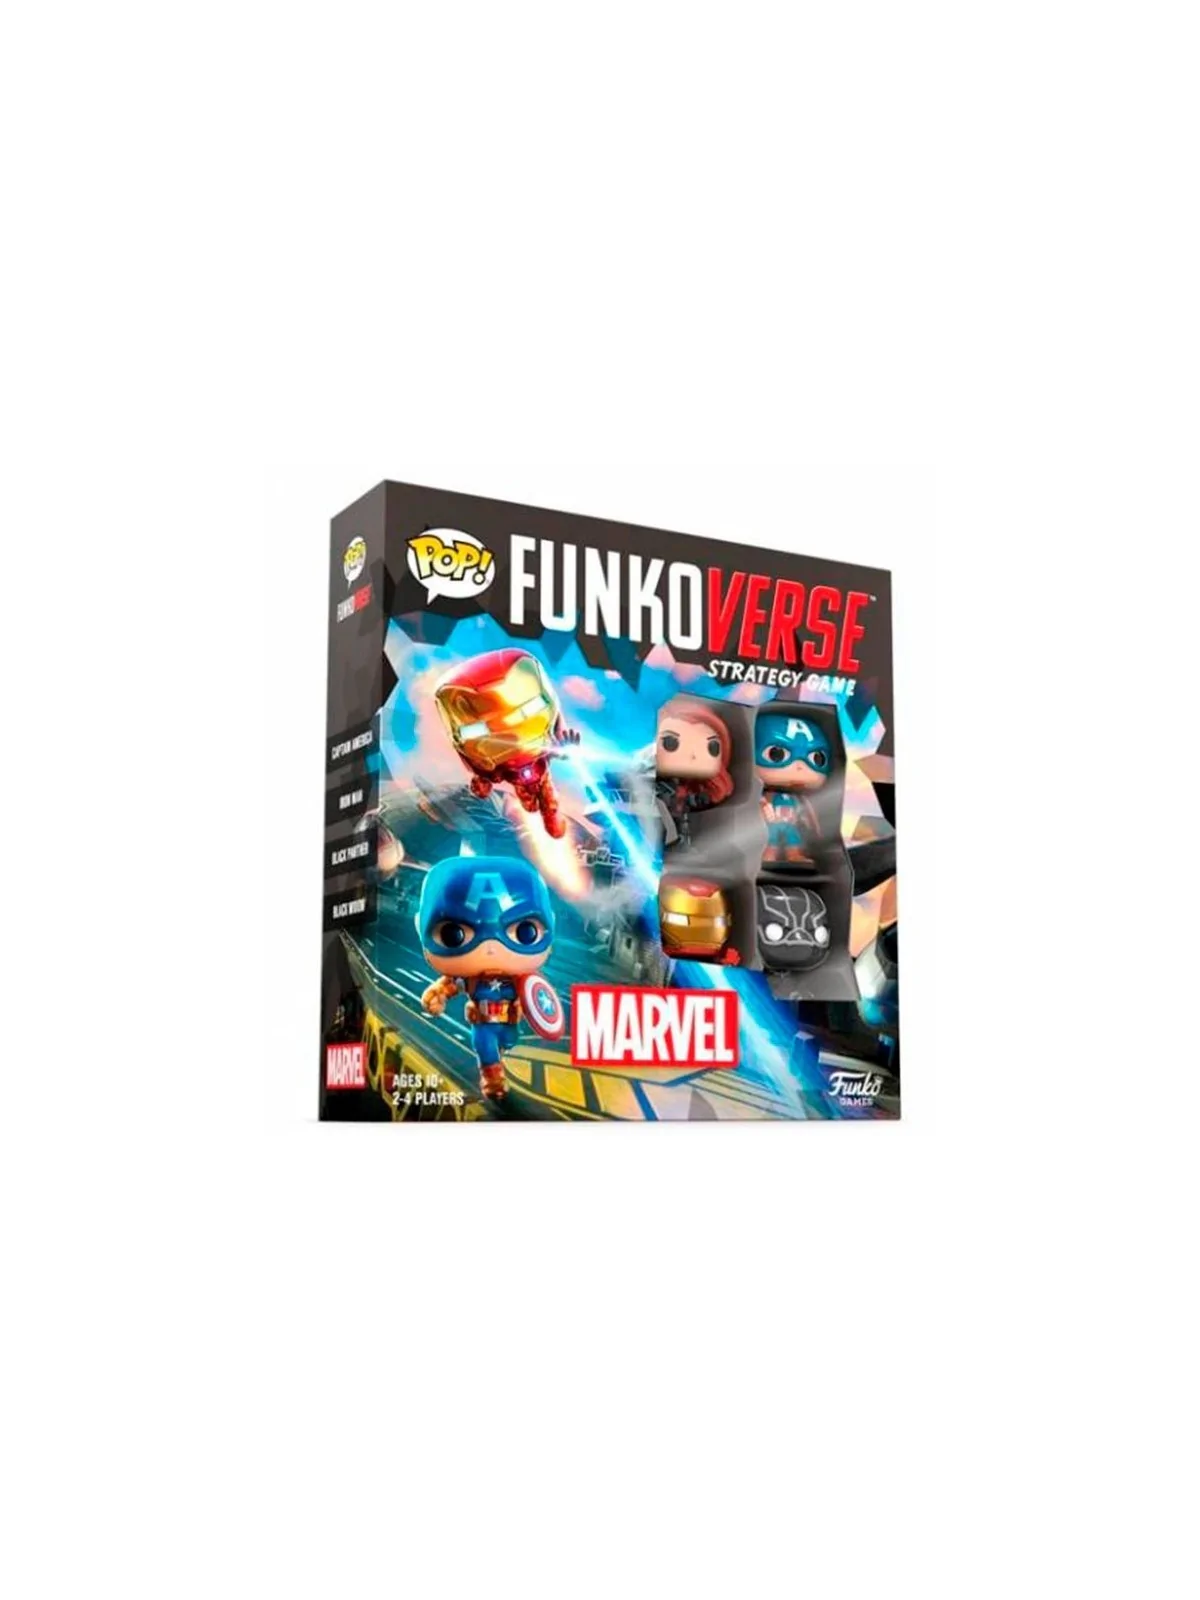 Comprar Funkoverse Strategy Game - Marvel 4 Figuras barato al mejor pr